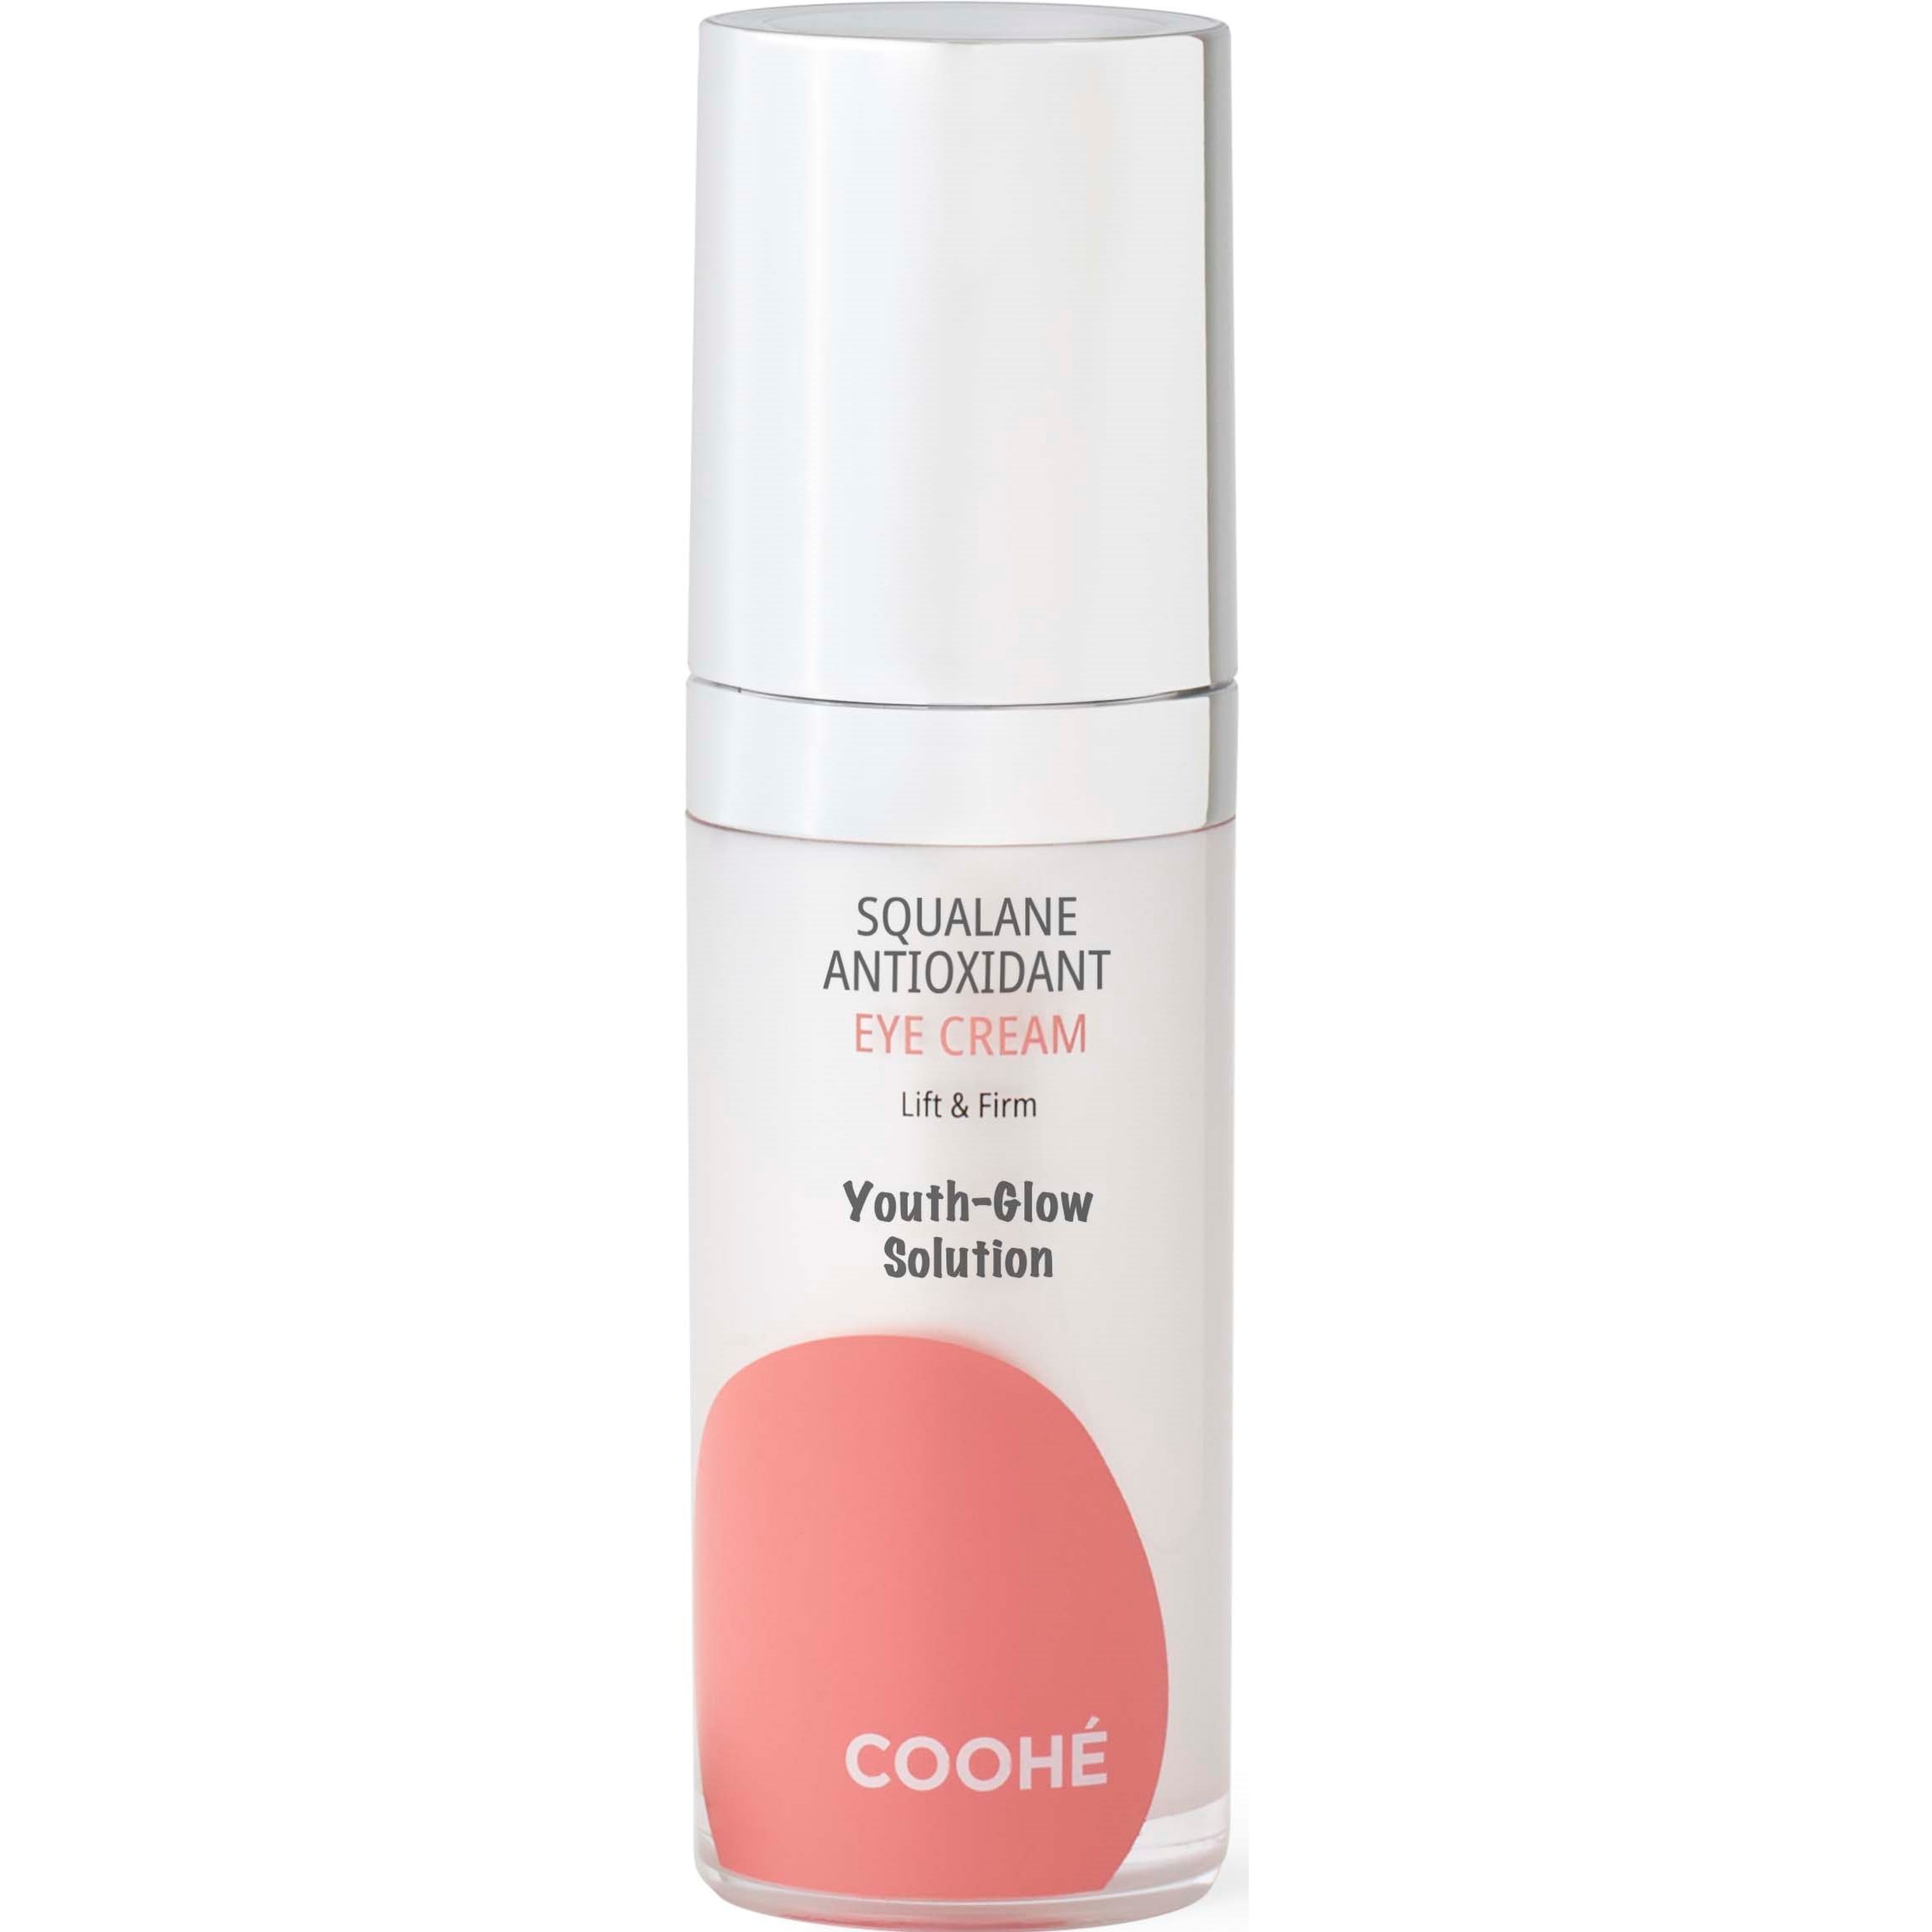 Bilde av Coohé Youth-glow Solution Squalane Antioxidant Eye Cream 30 Ml